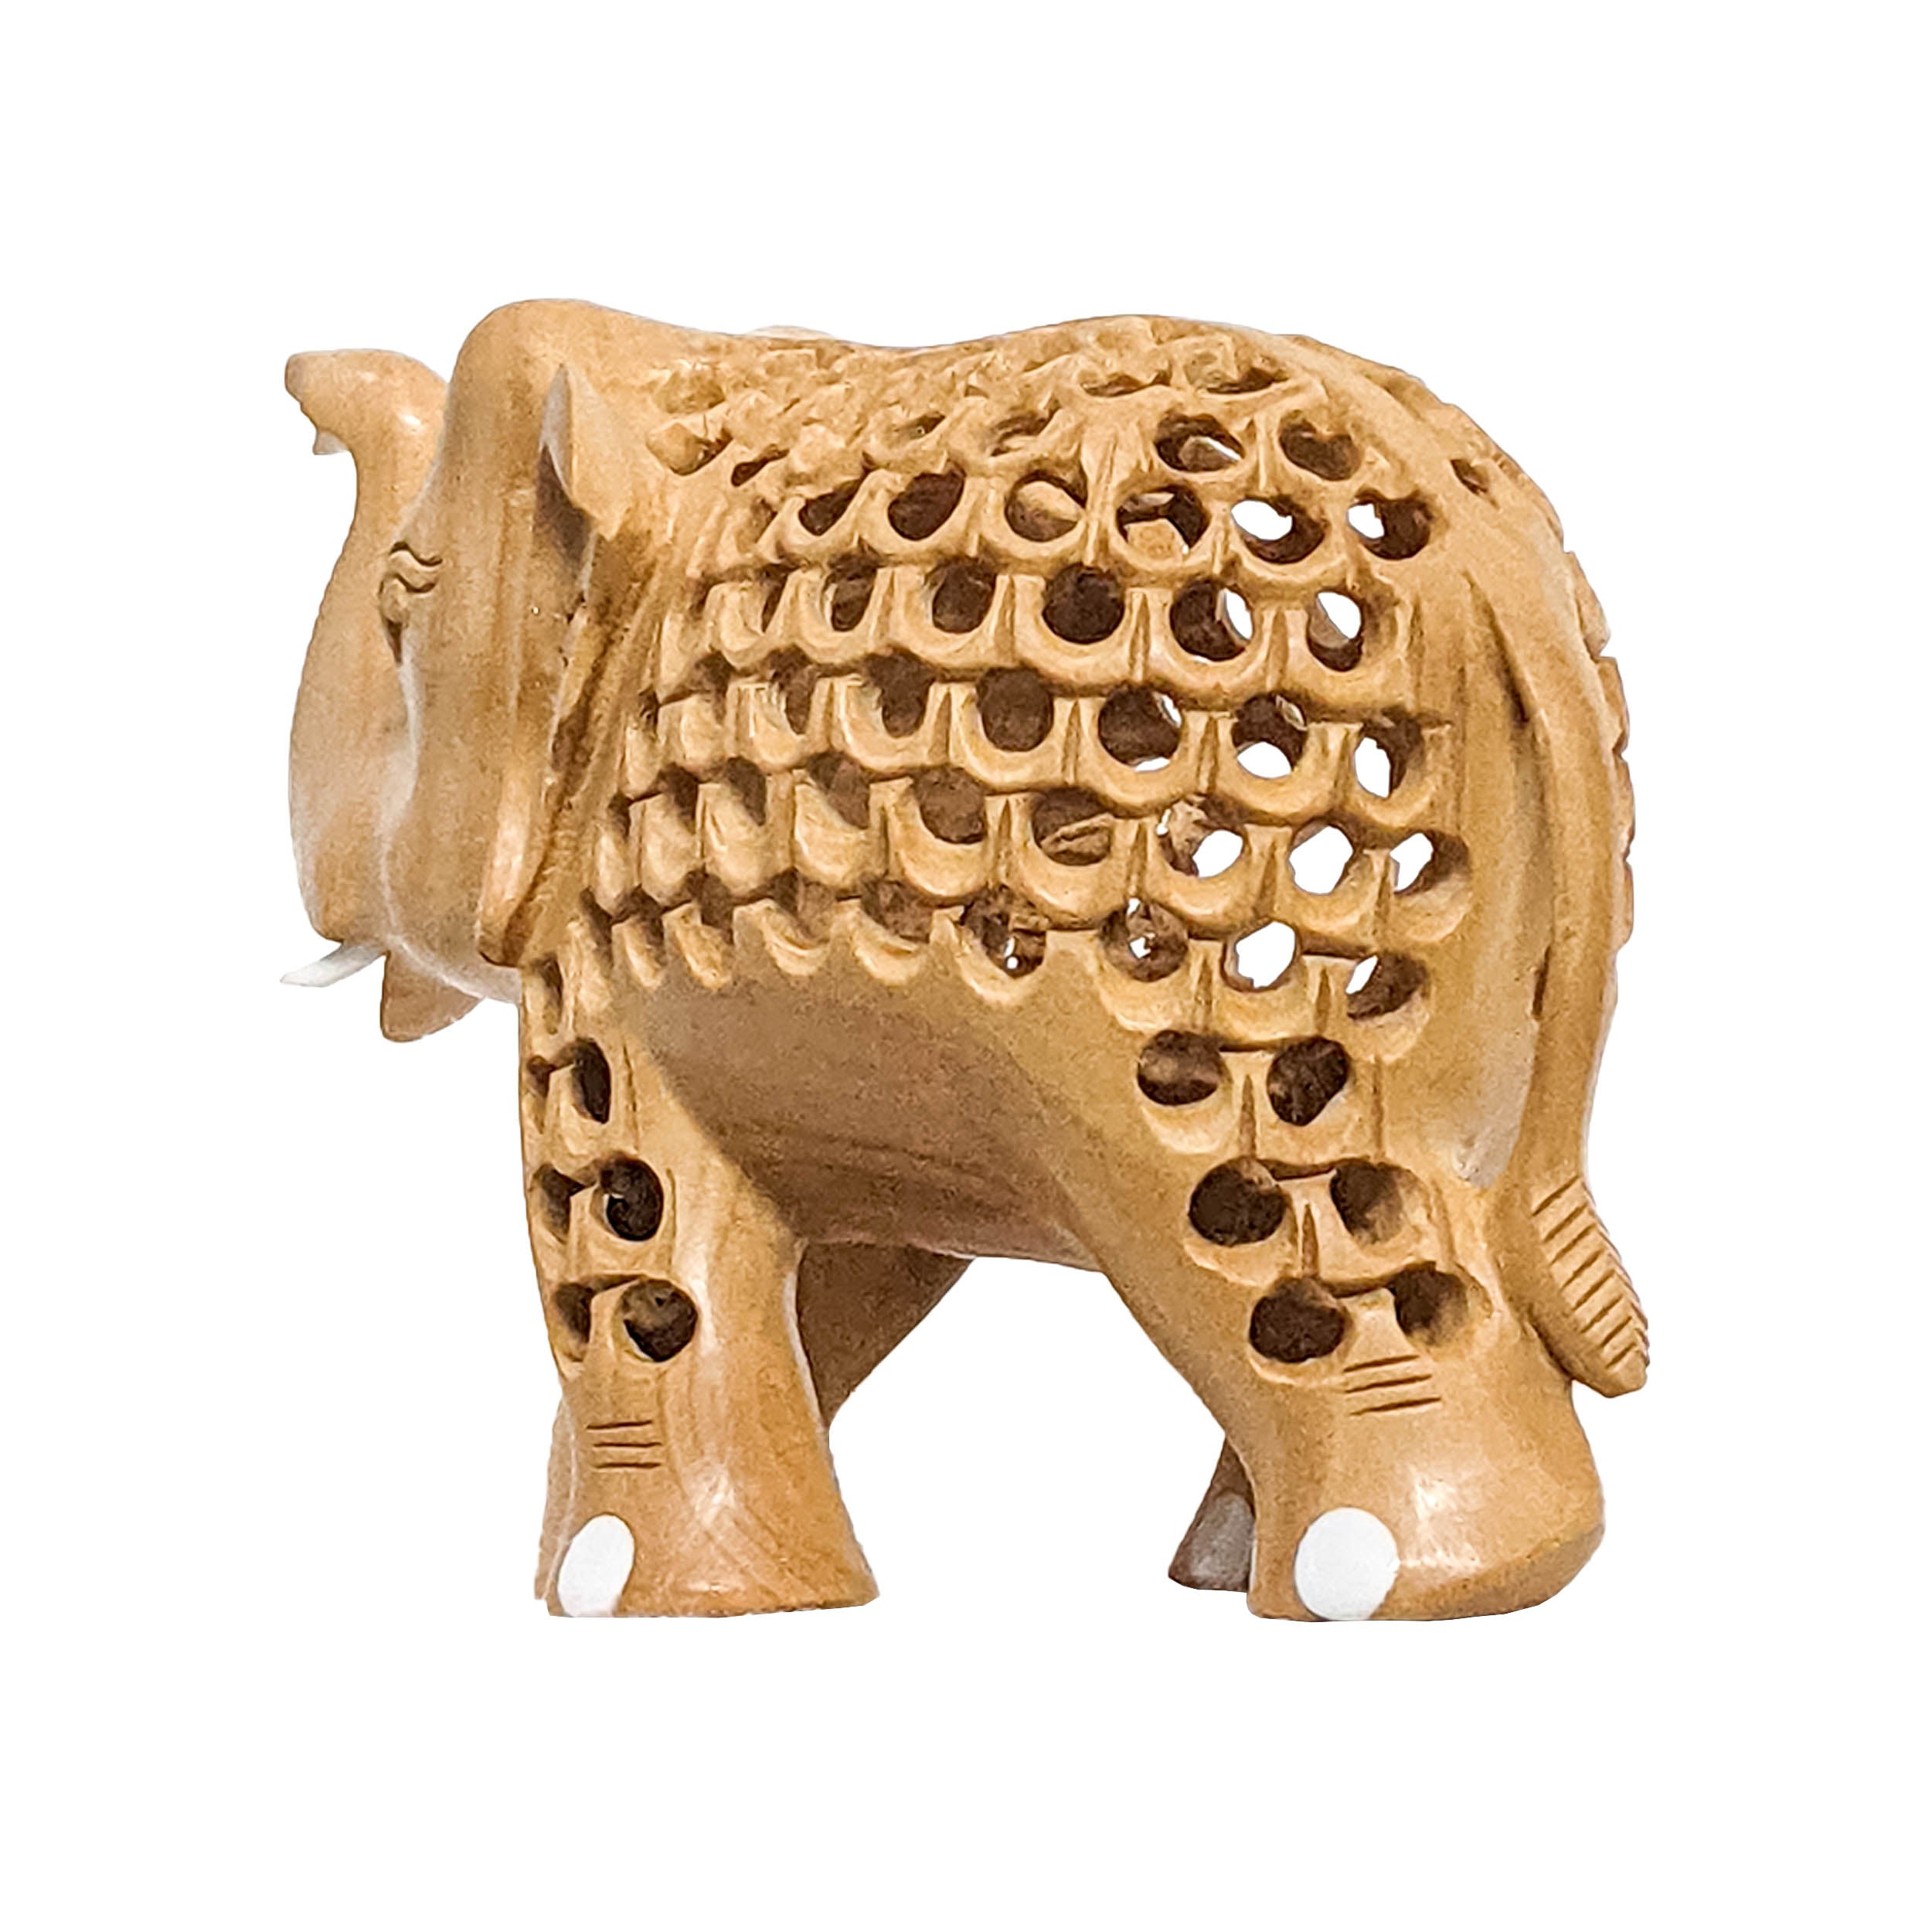 Wooden Handcrafted Elephant Sculpture